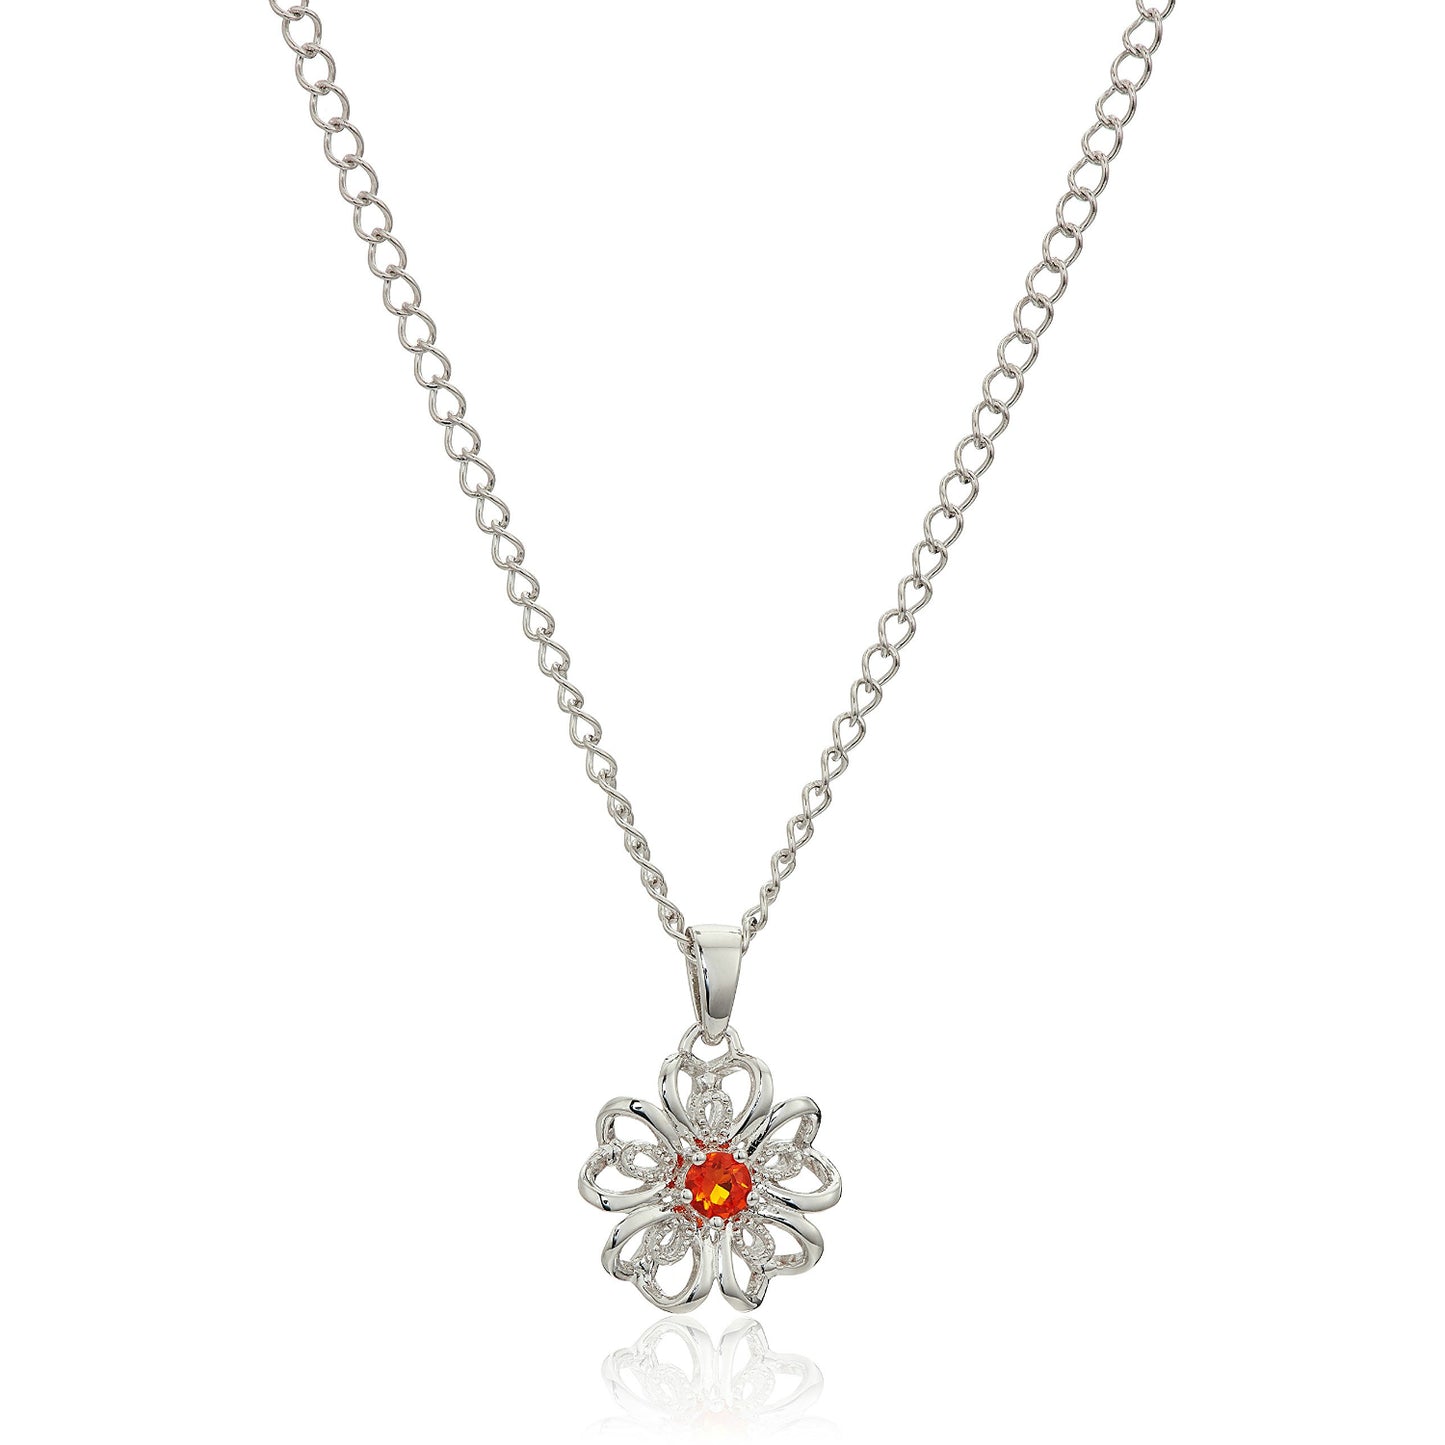 Sterling Silver Fire Opal Black Flower Pendant Necklace, 18" - Orange - Pinctore